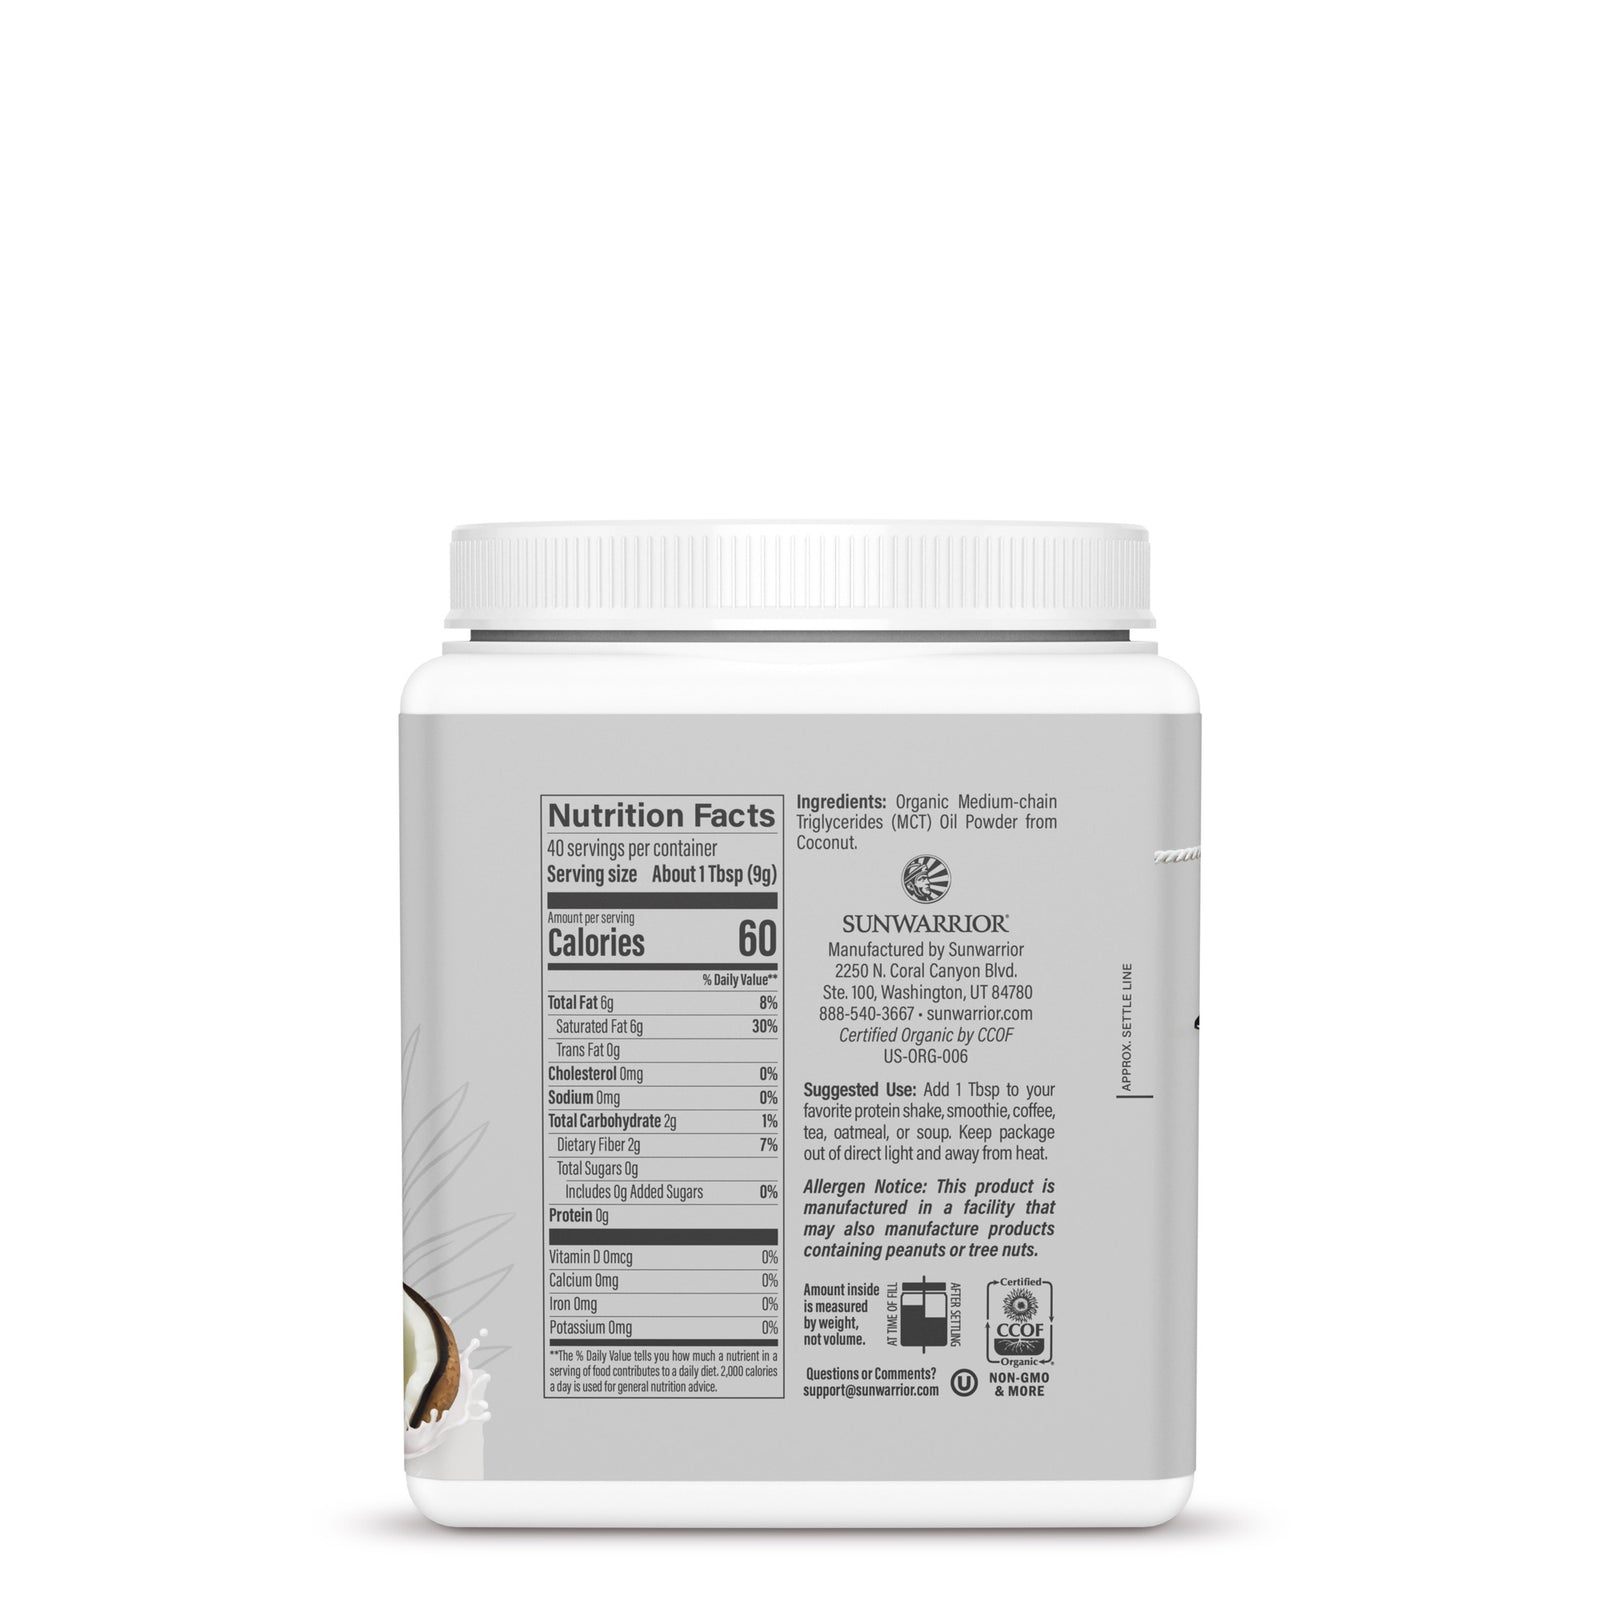 Bột MCT hữu cơ Sunwarrior Organic Active MCT Oil Powder 360g 3